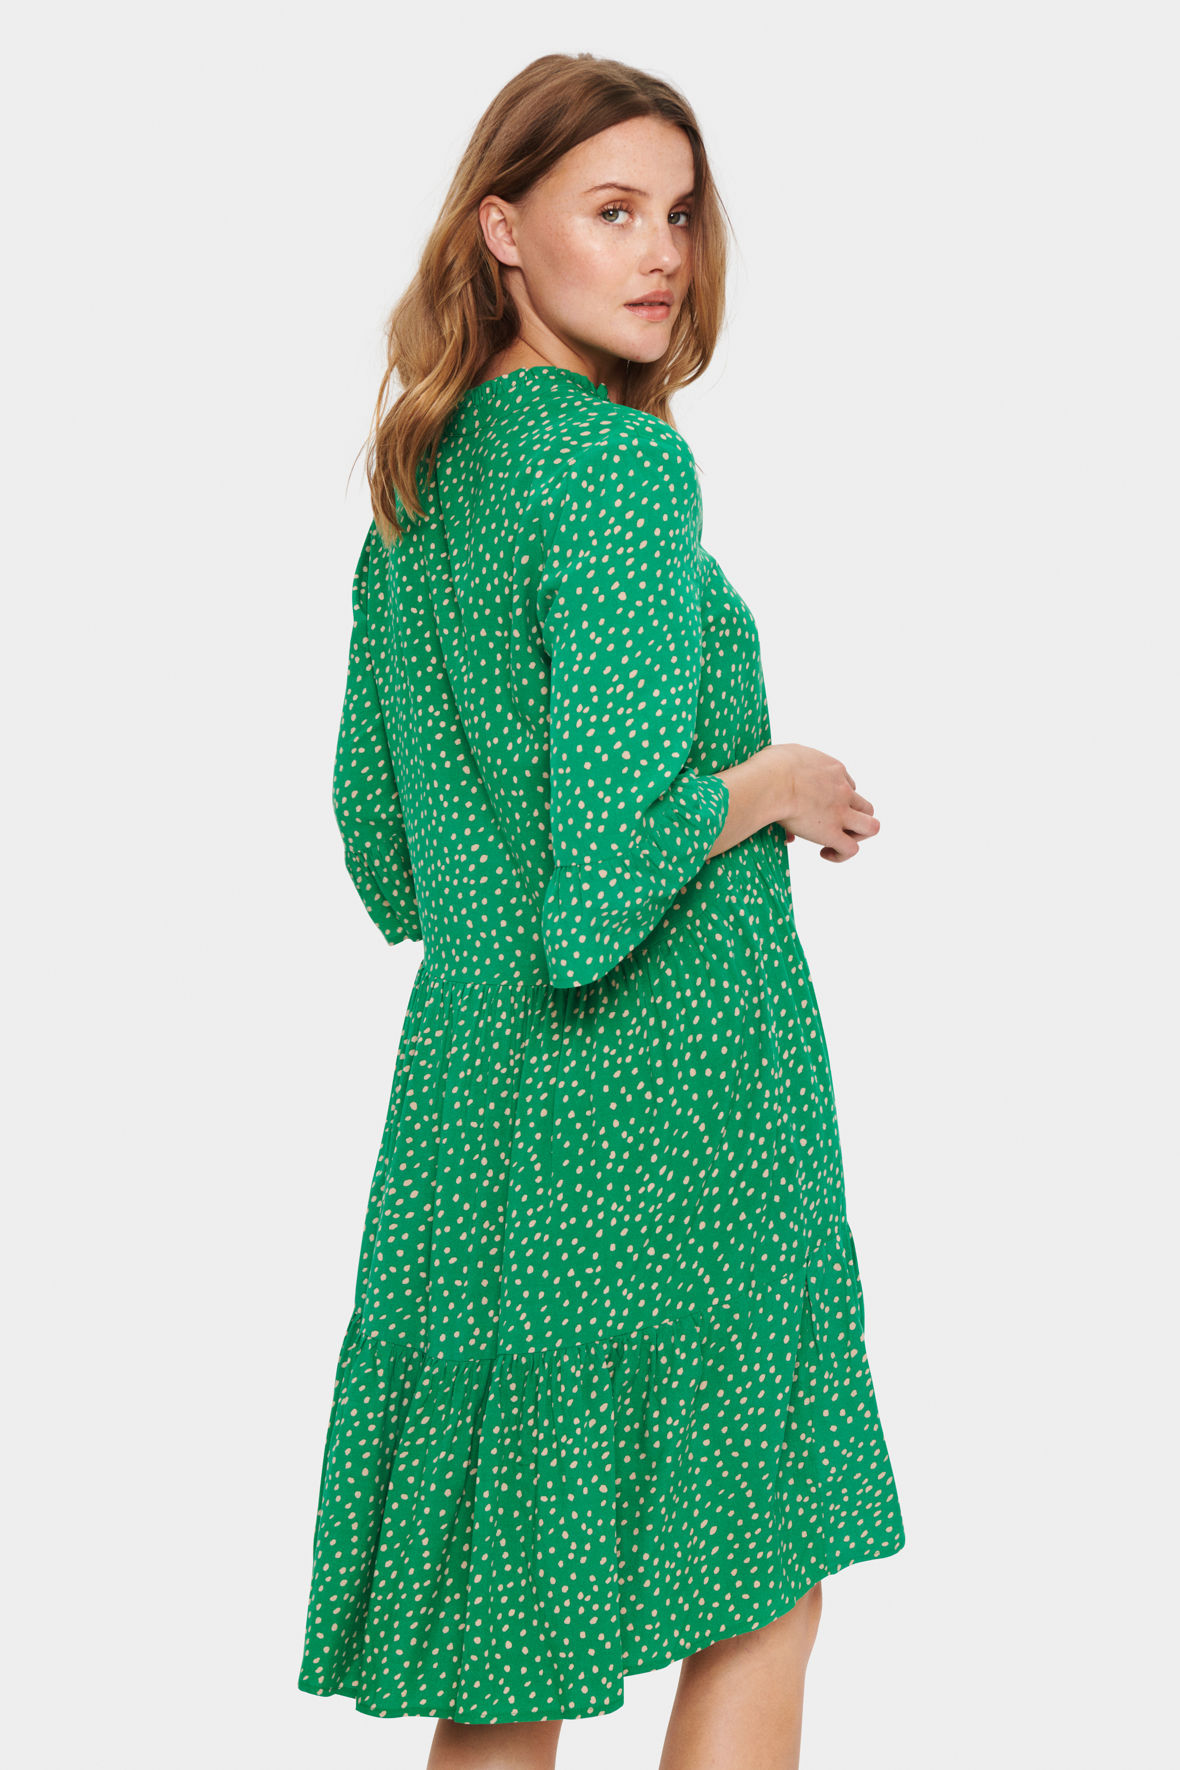 snit -løst Saint Tropez - - Hos smuk & grøn flagrende Lohse sommerkjole Dress